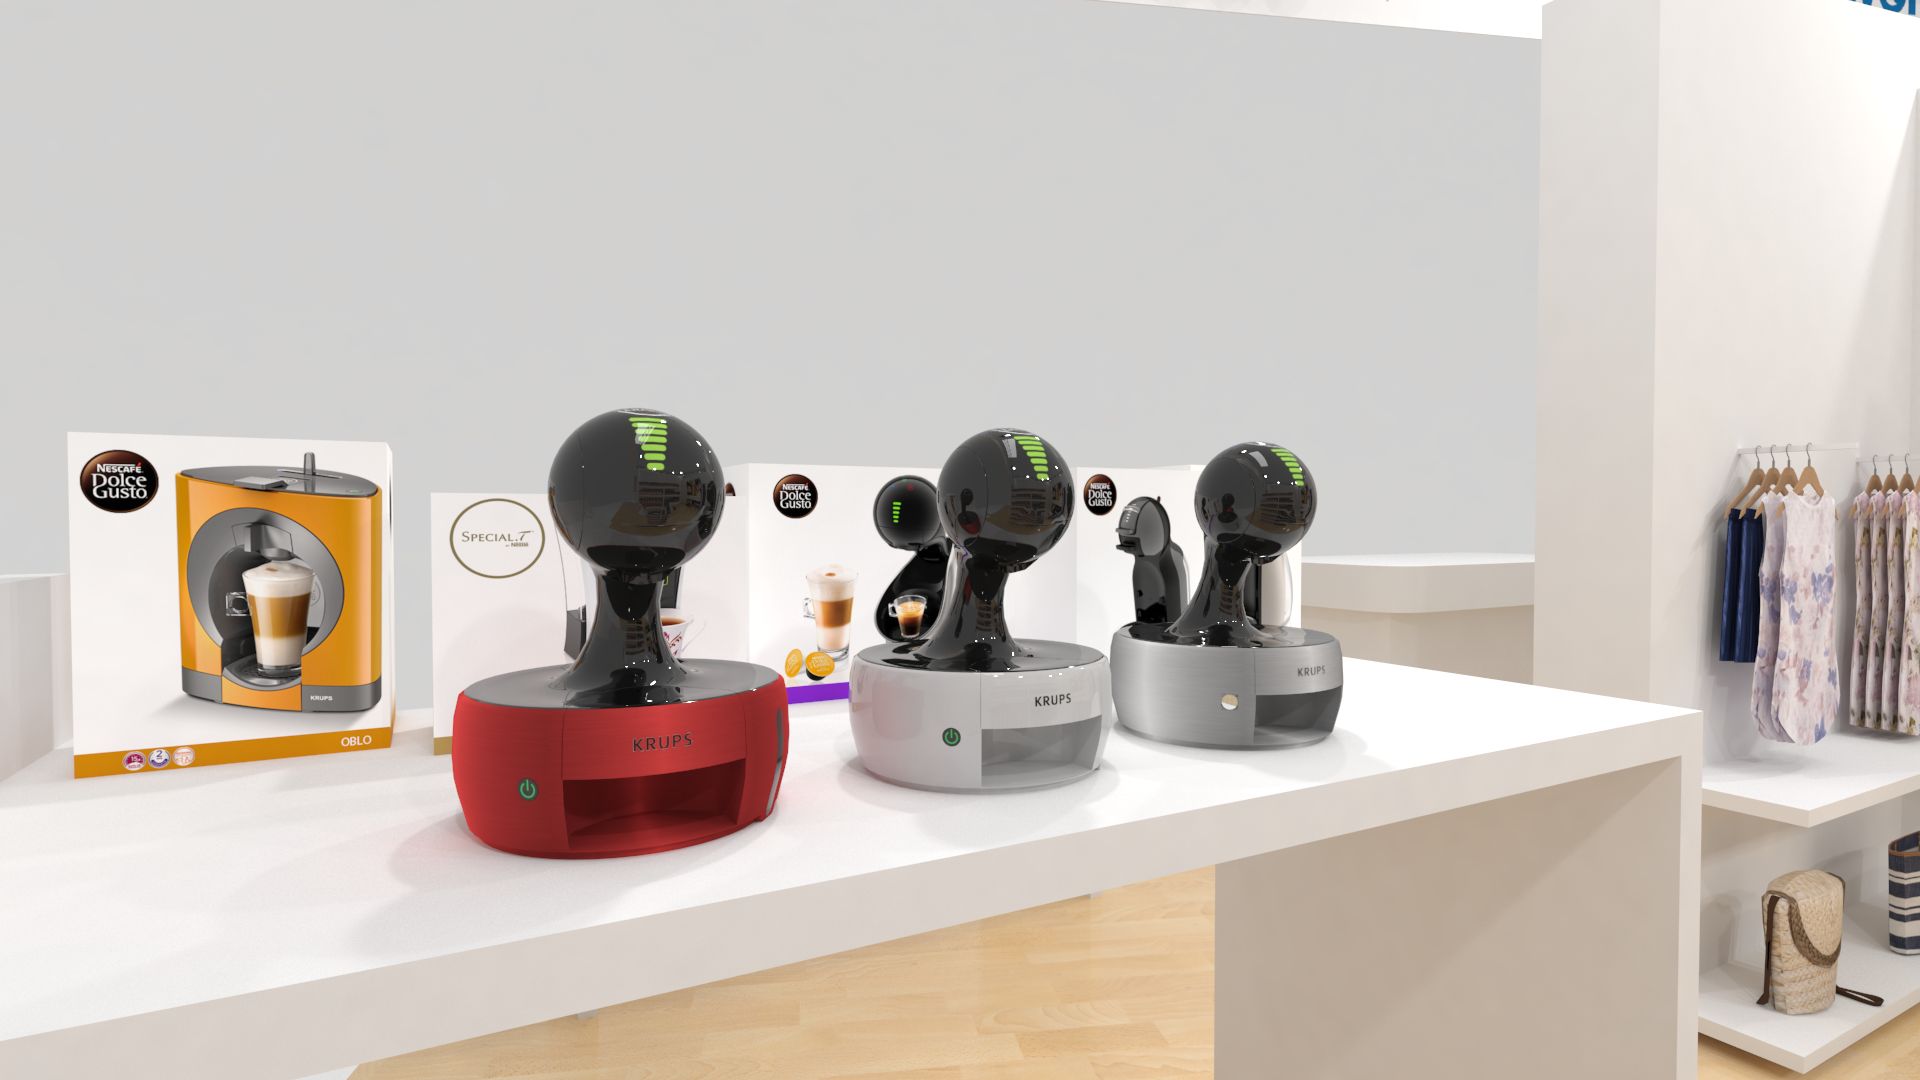 Atos VR Store